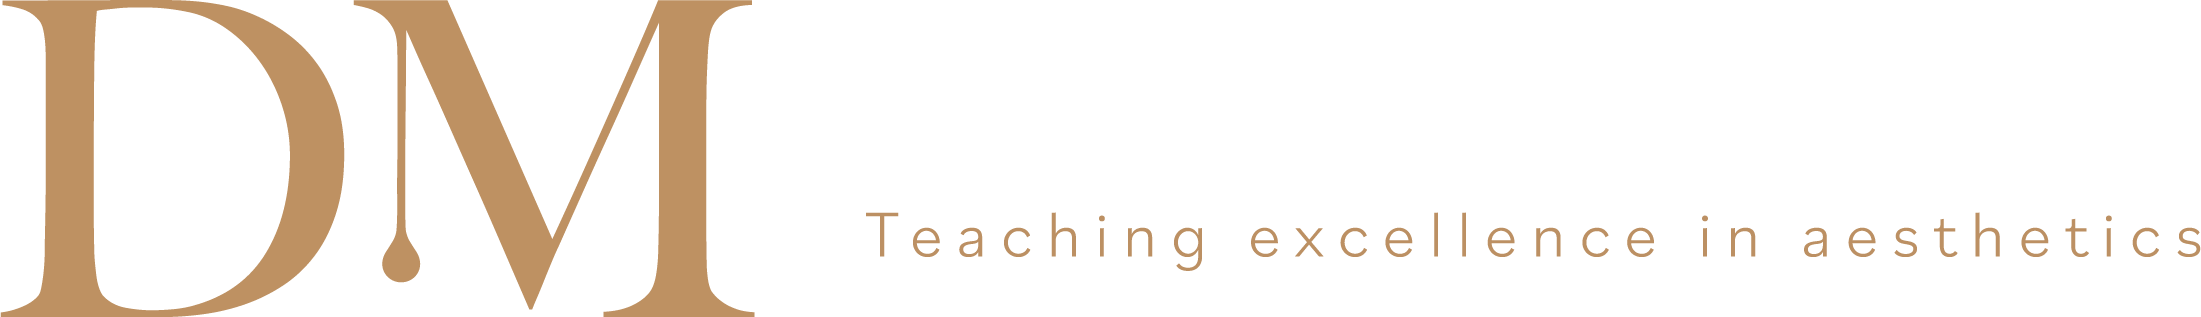 Derma Medical Logo